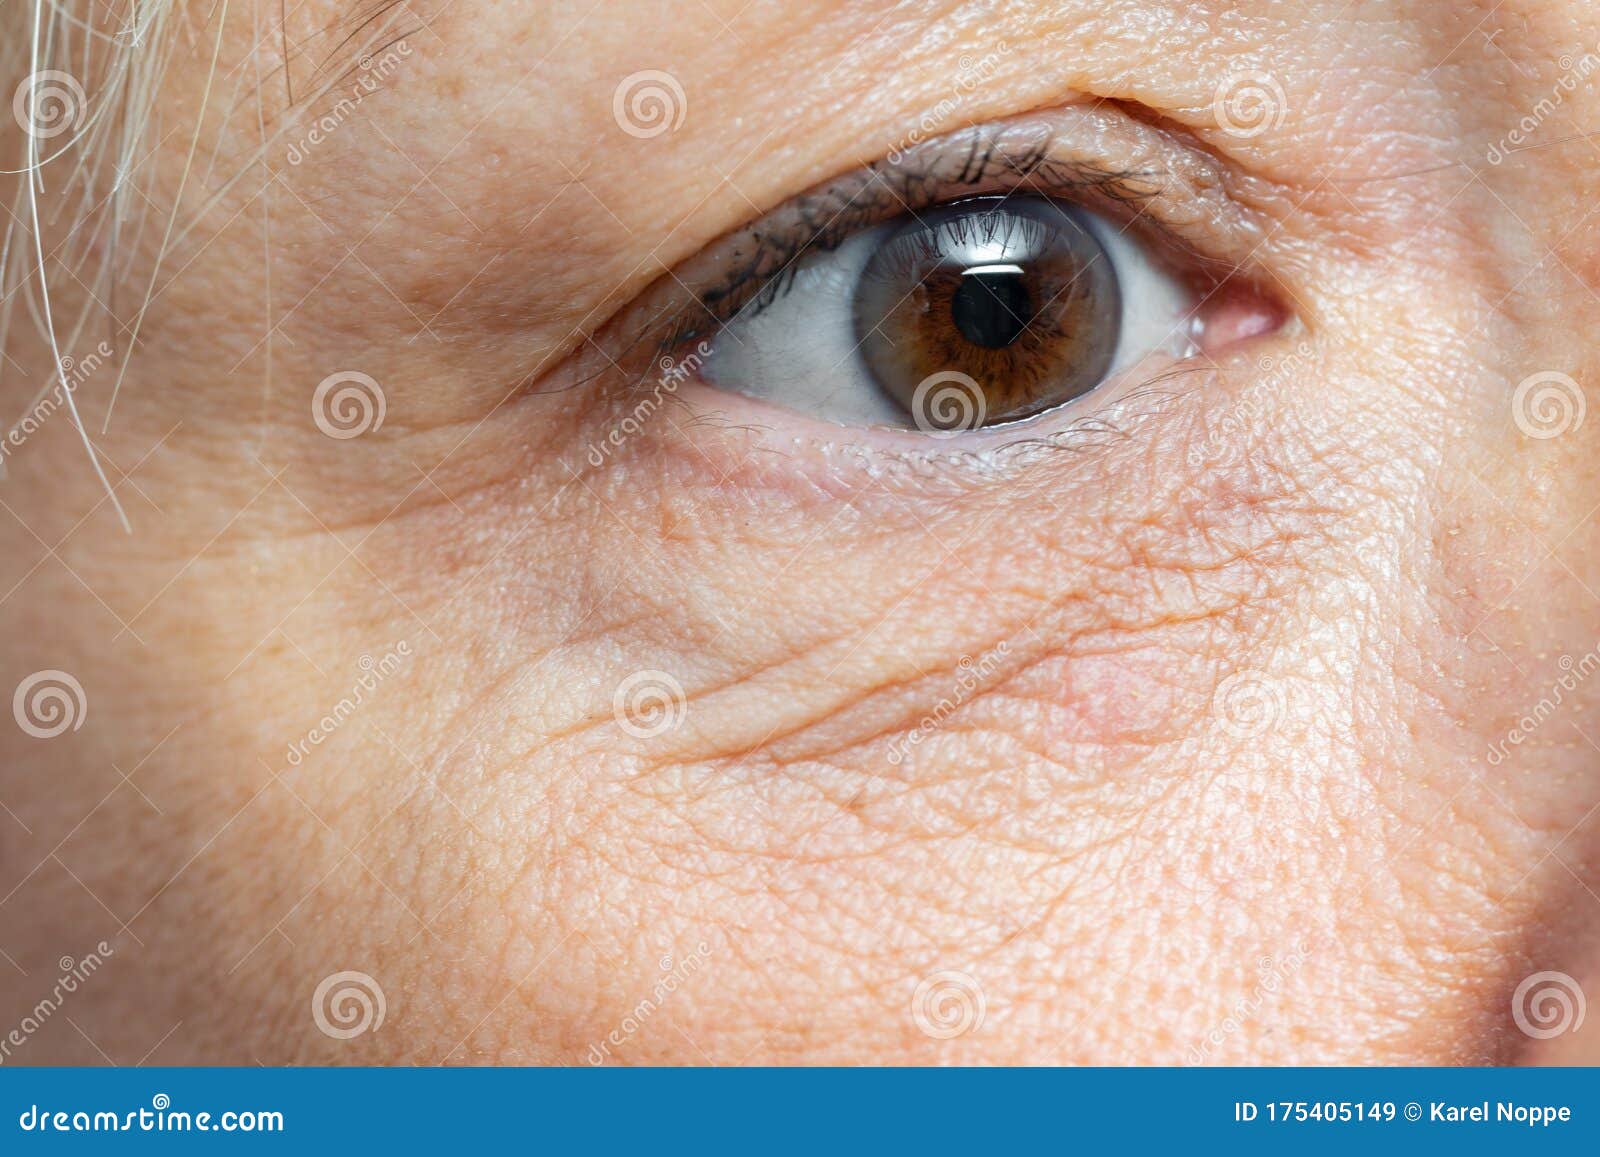 macro detail of under eye wrinkles on middle aged woman